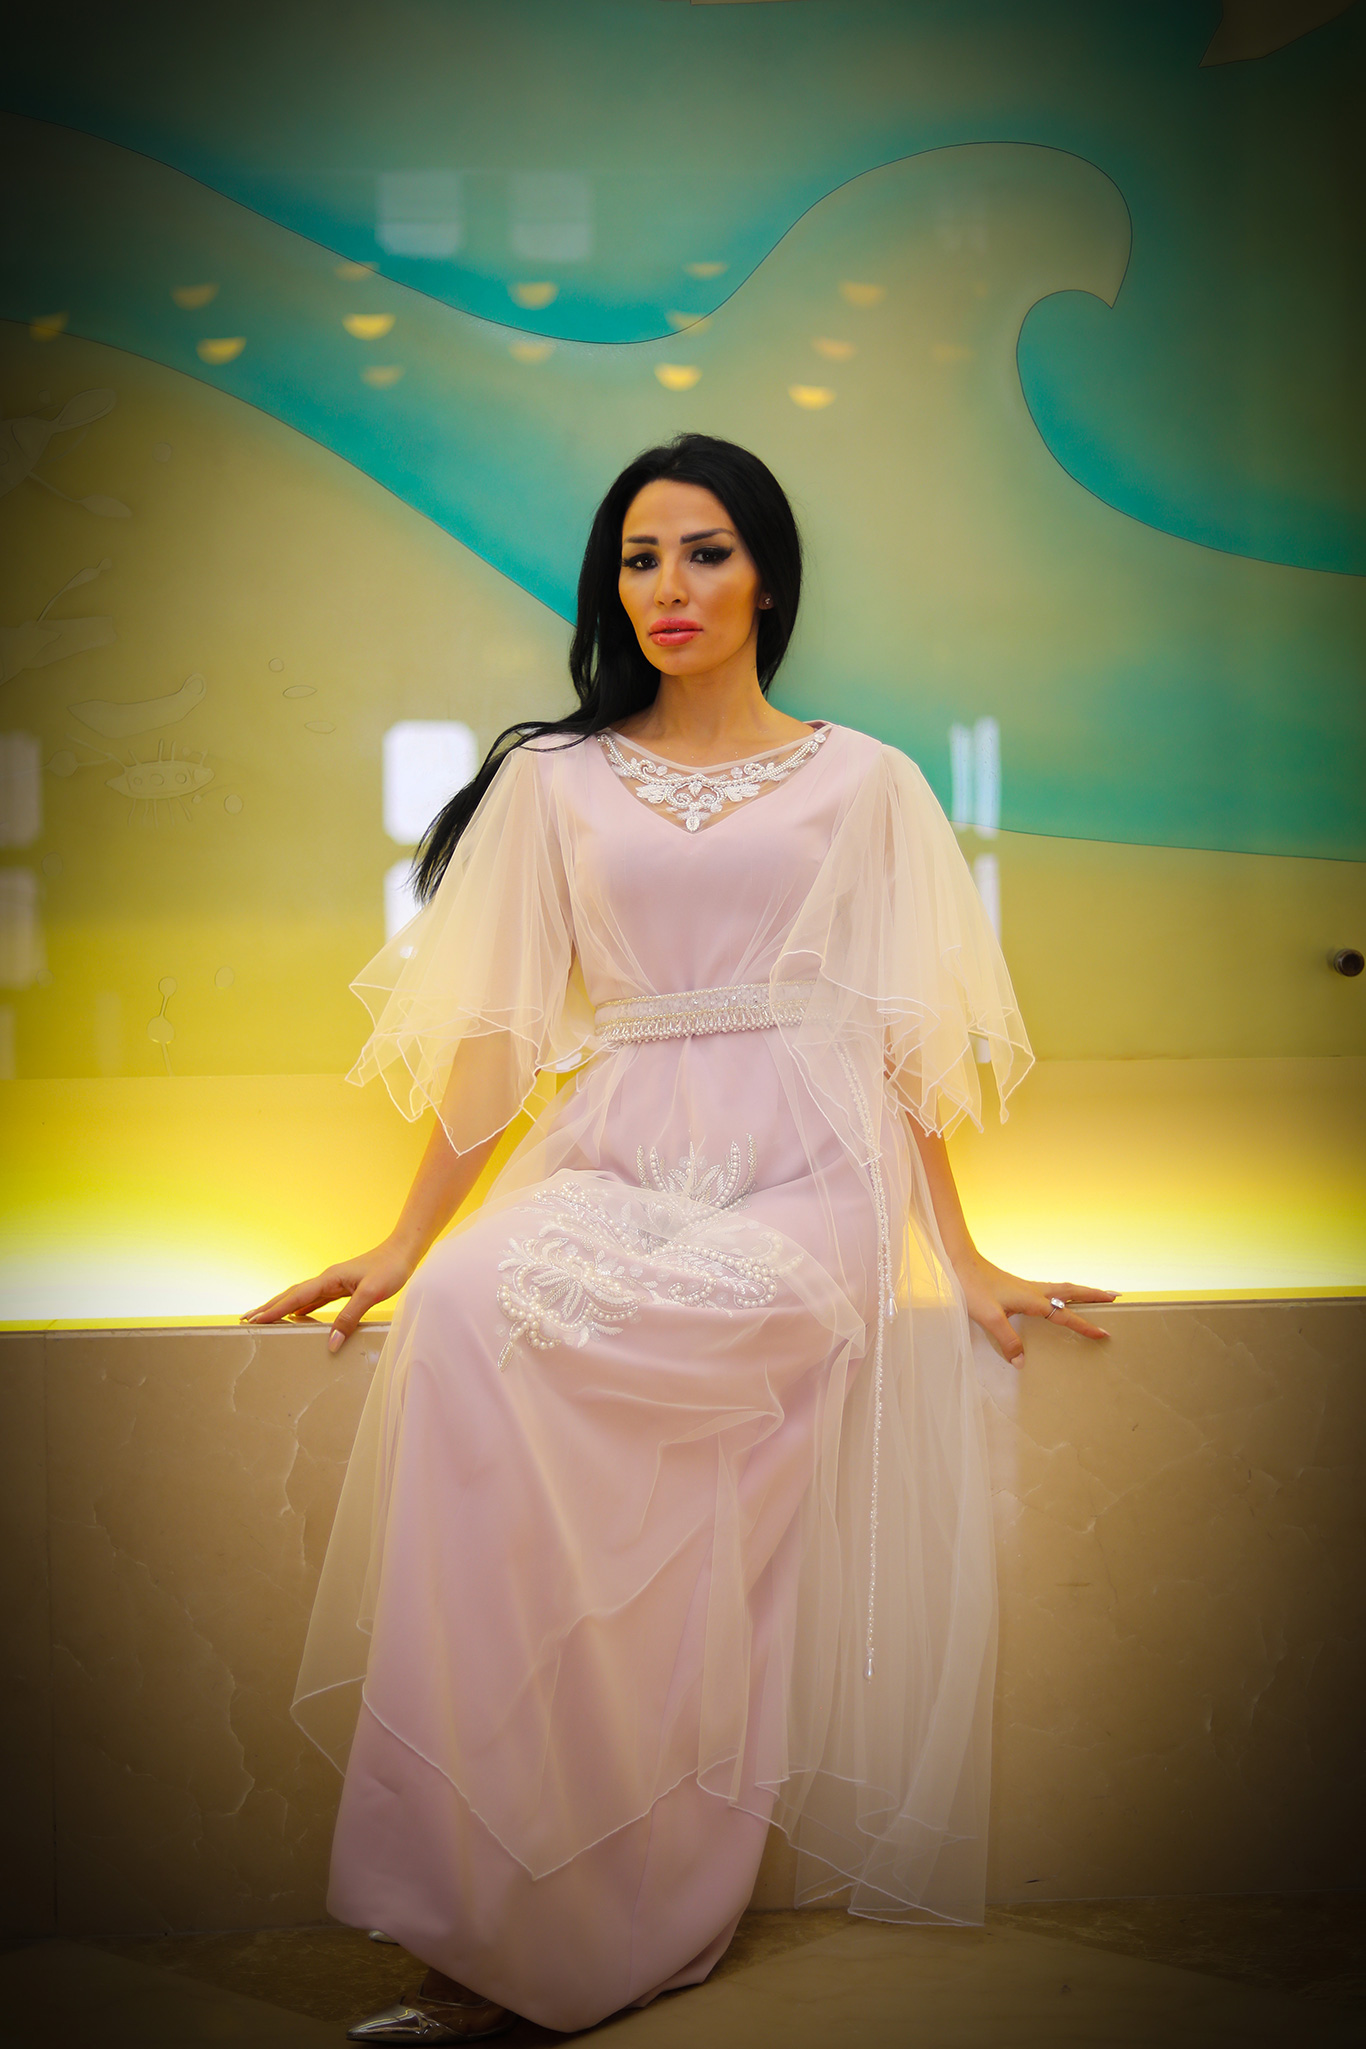 Professional Fashion Photography Companies in Doha Qatar